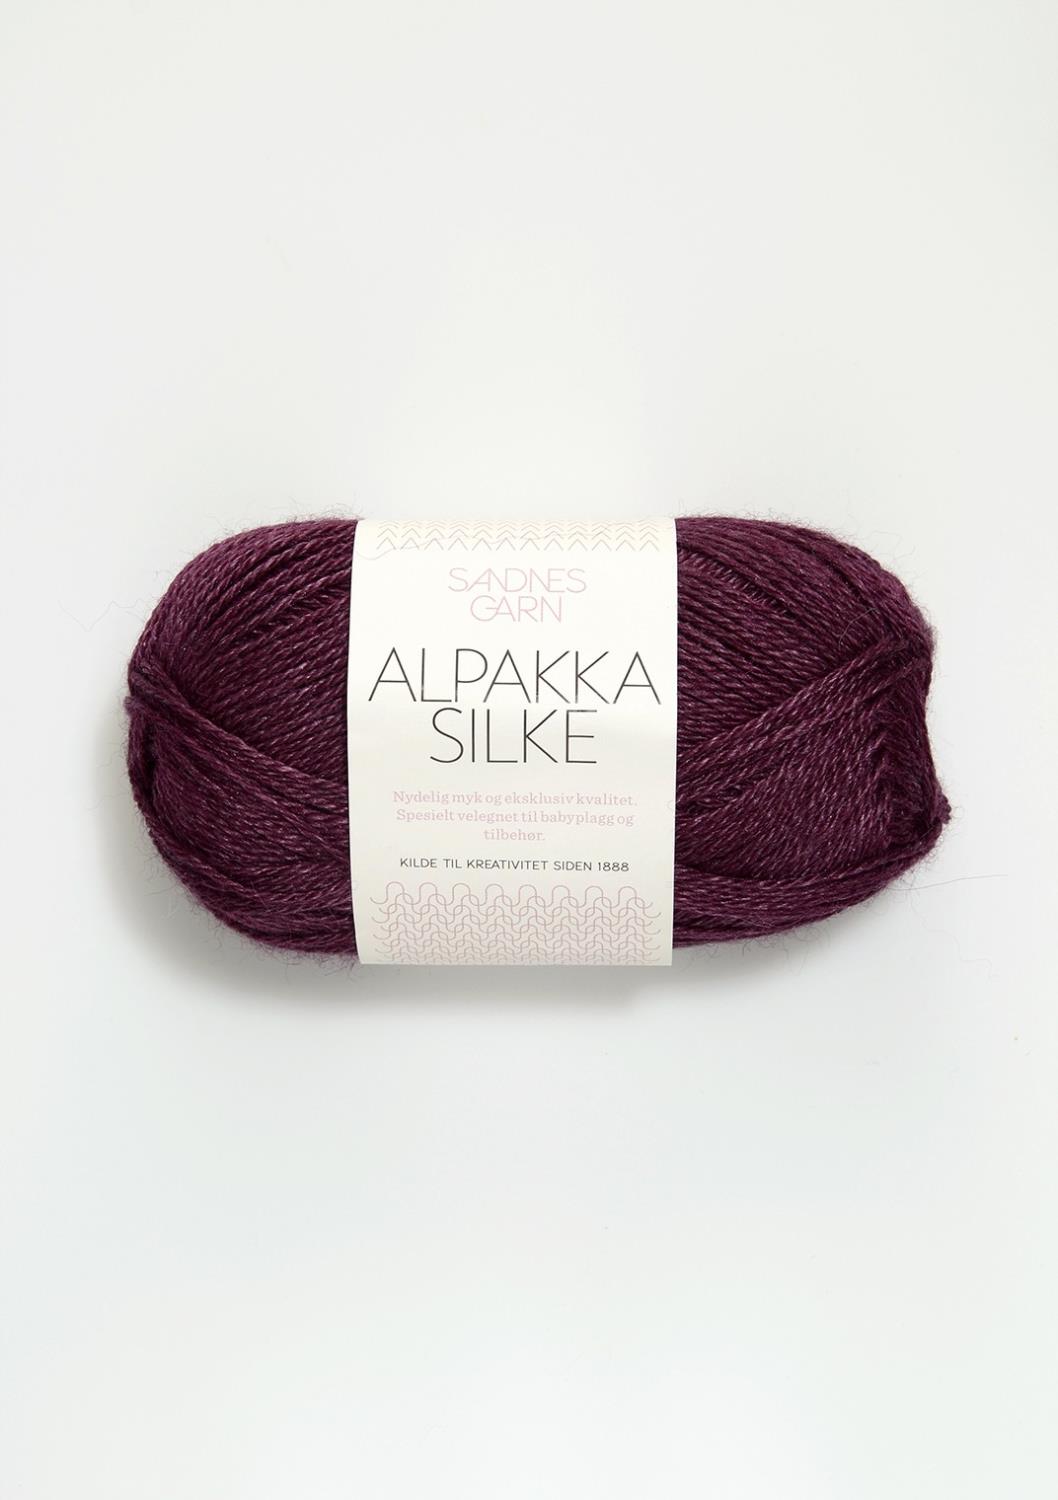 Alpakka Silke Sandnes 5063 - Lilla